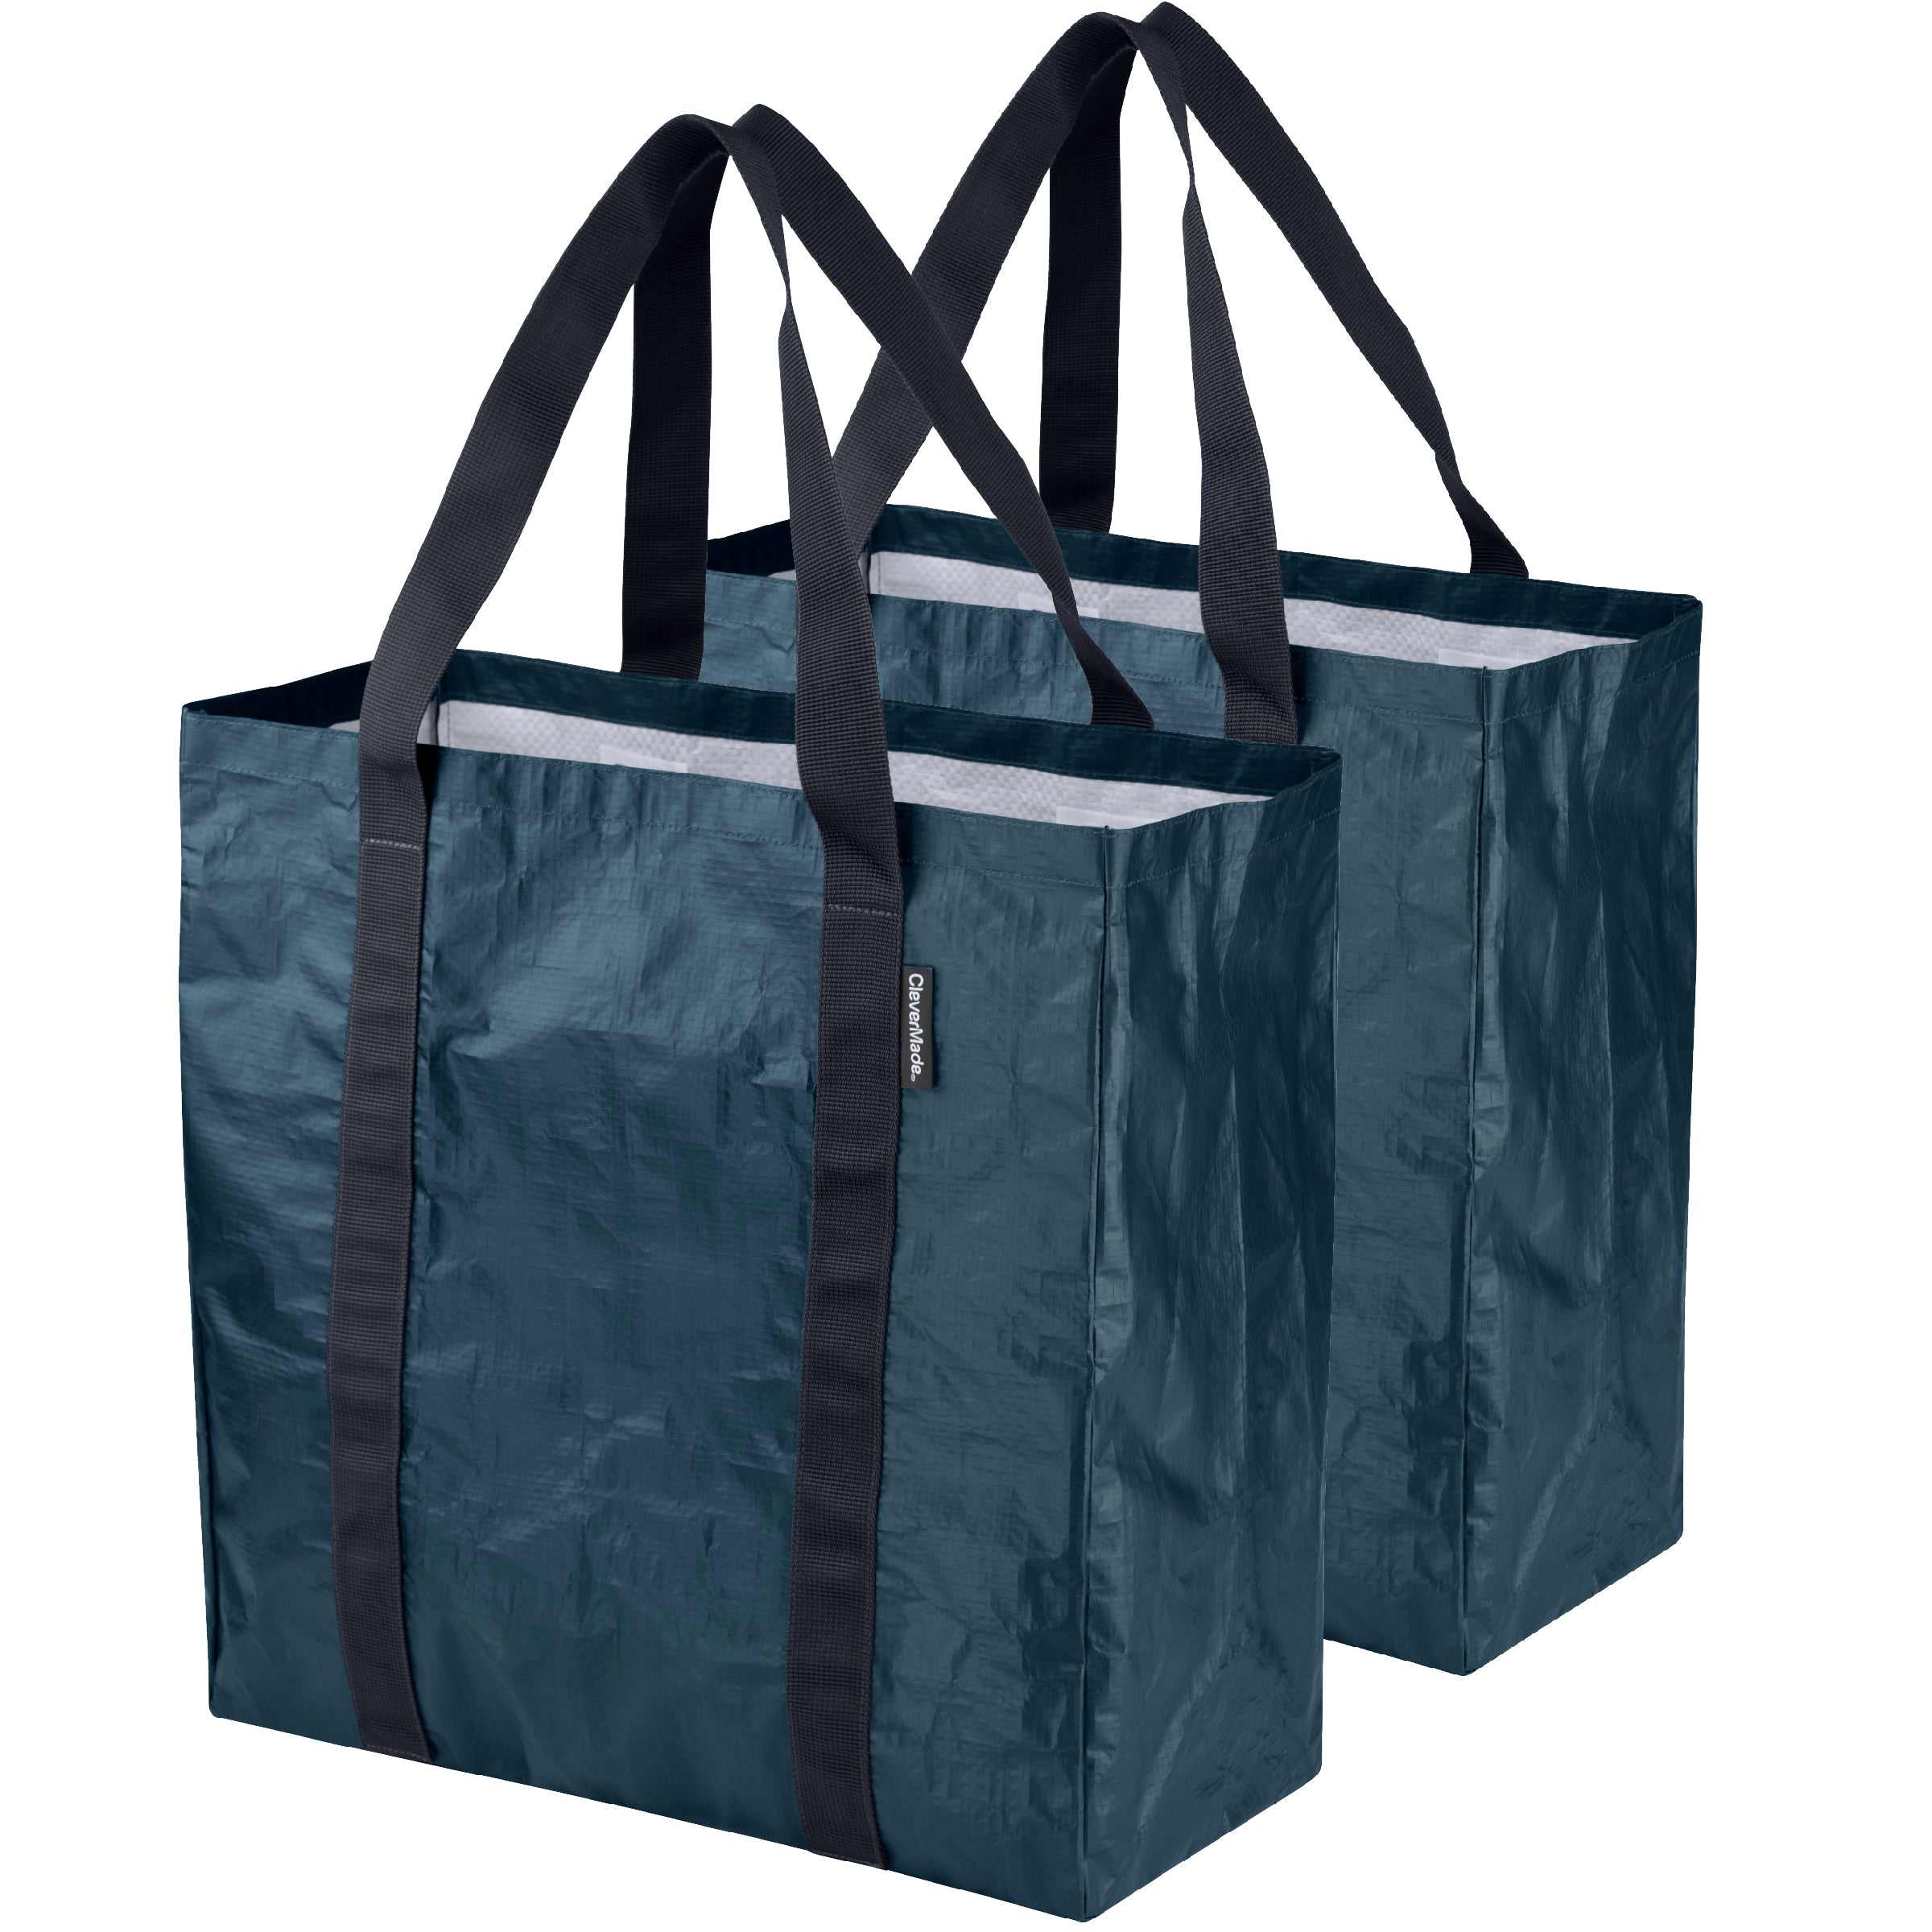 CleverMade Blue Medium Plastic Storage Bag - 15.5-in x 11-in x 9